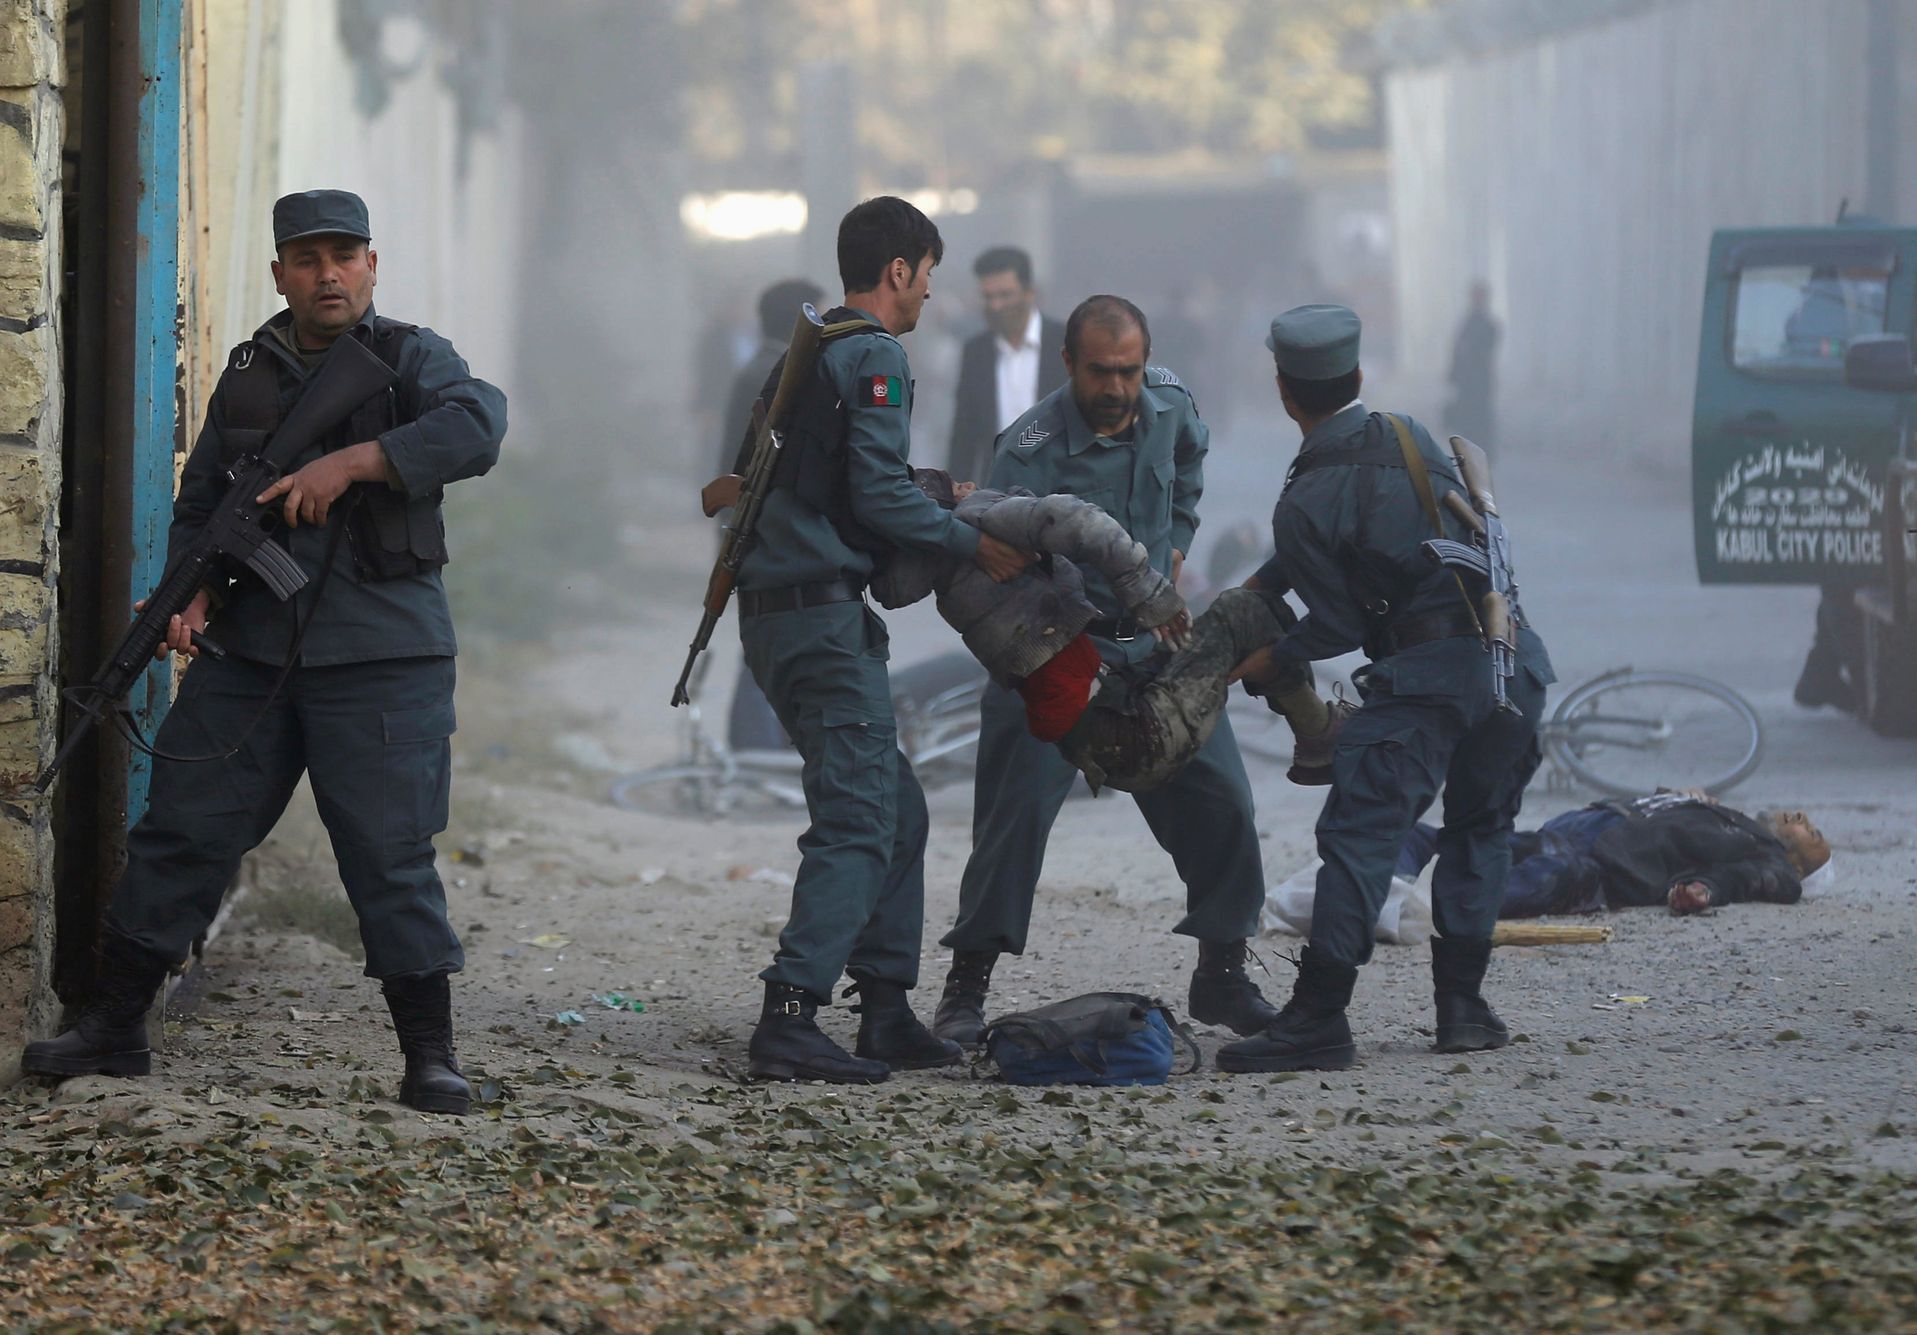 Sebevražedný útok v diplomatické čtvrti v Kábulu